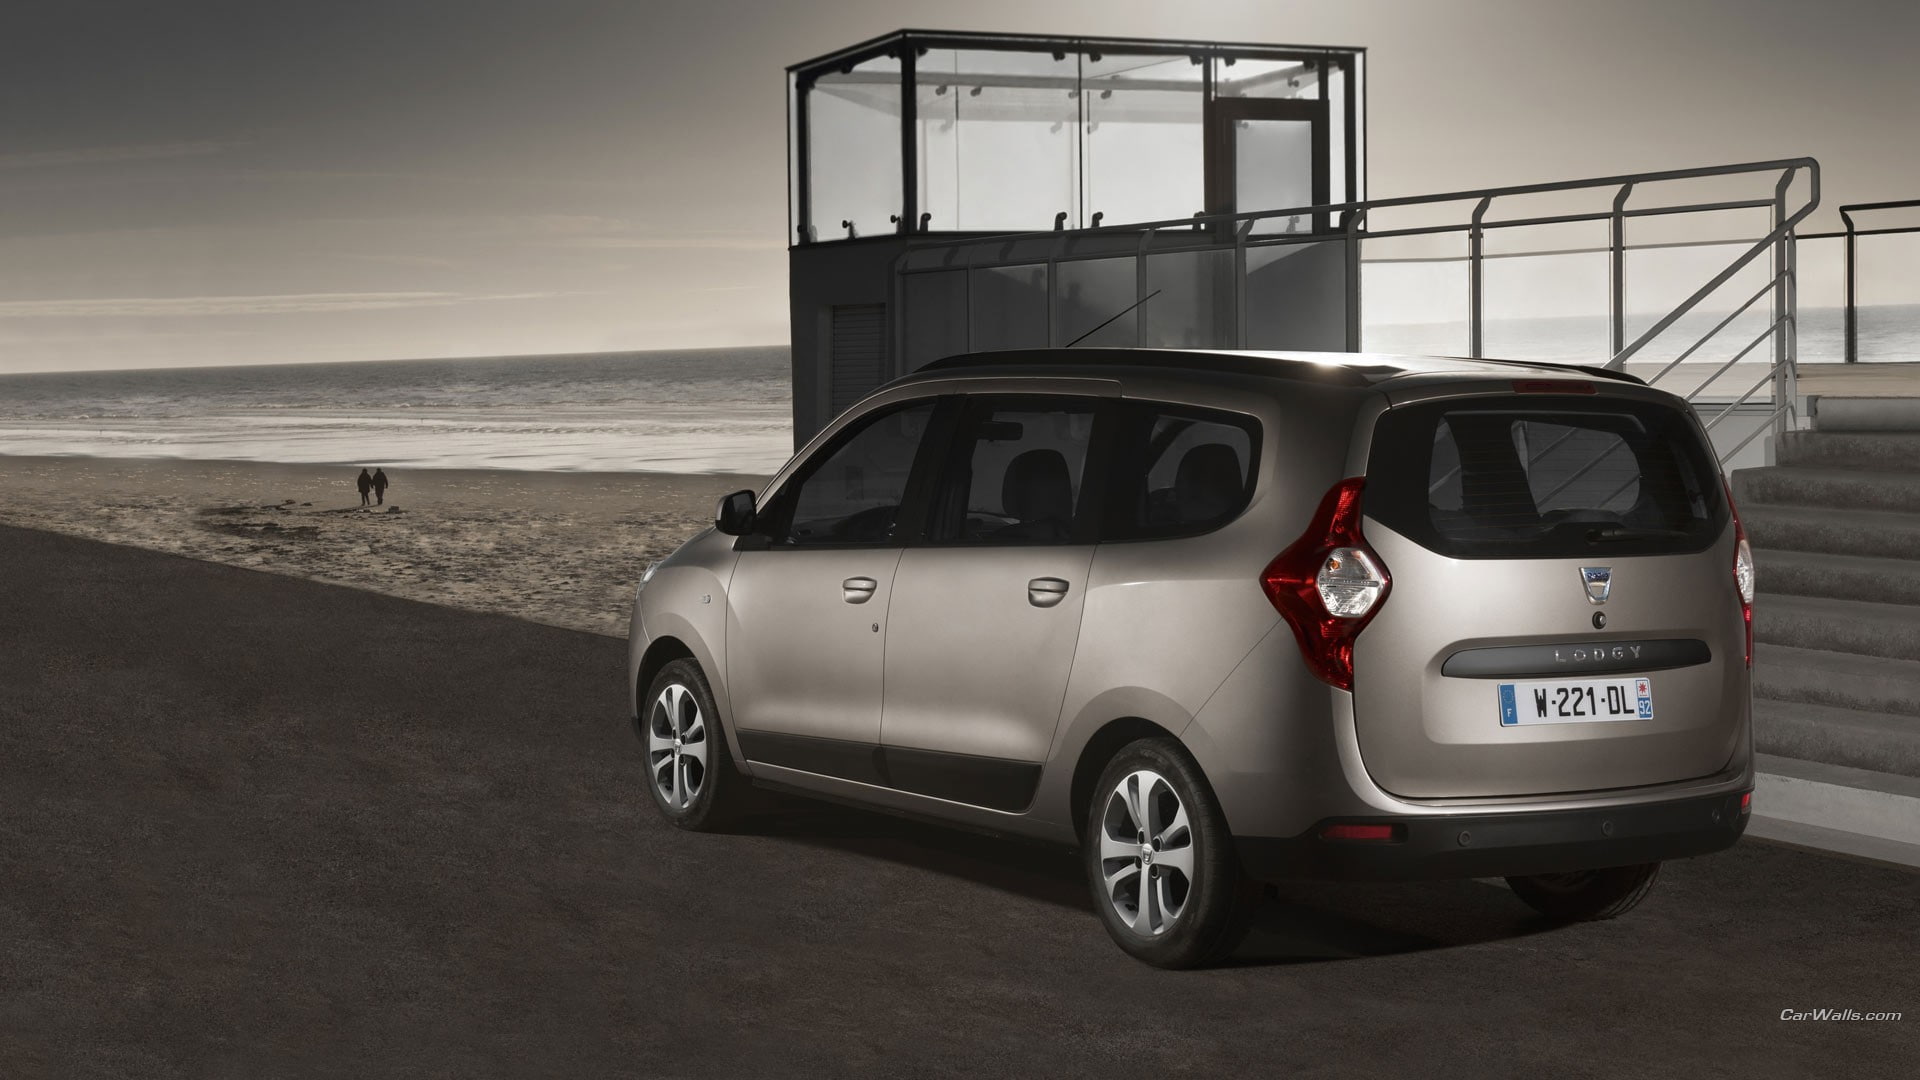 Dacia Lodgy, car, beach, vehicle, sea, land, water, sky, motor vehicle